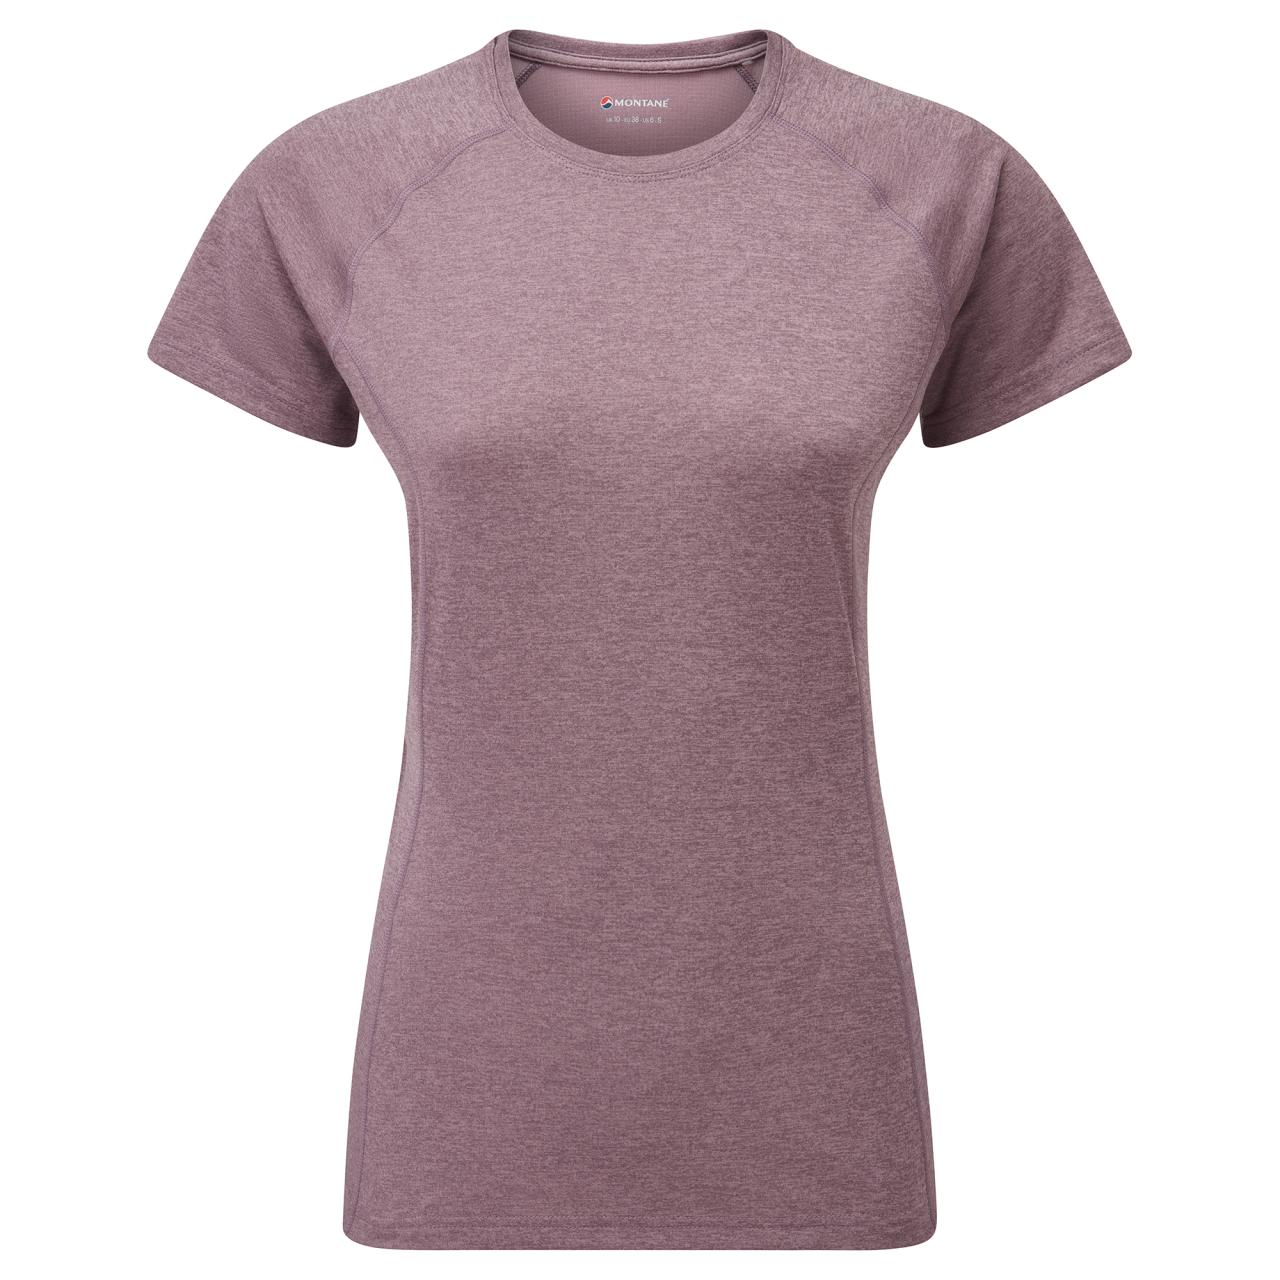 FEM DART T-SHIRT-MOONSCAPE-UK14/L dámské triko šedofialové